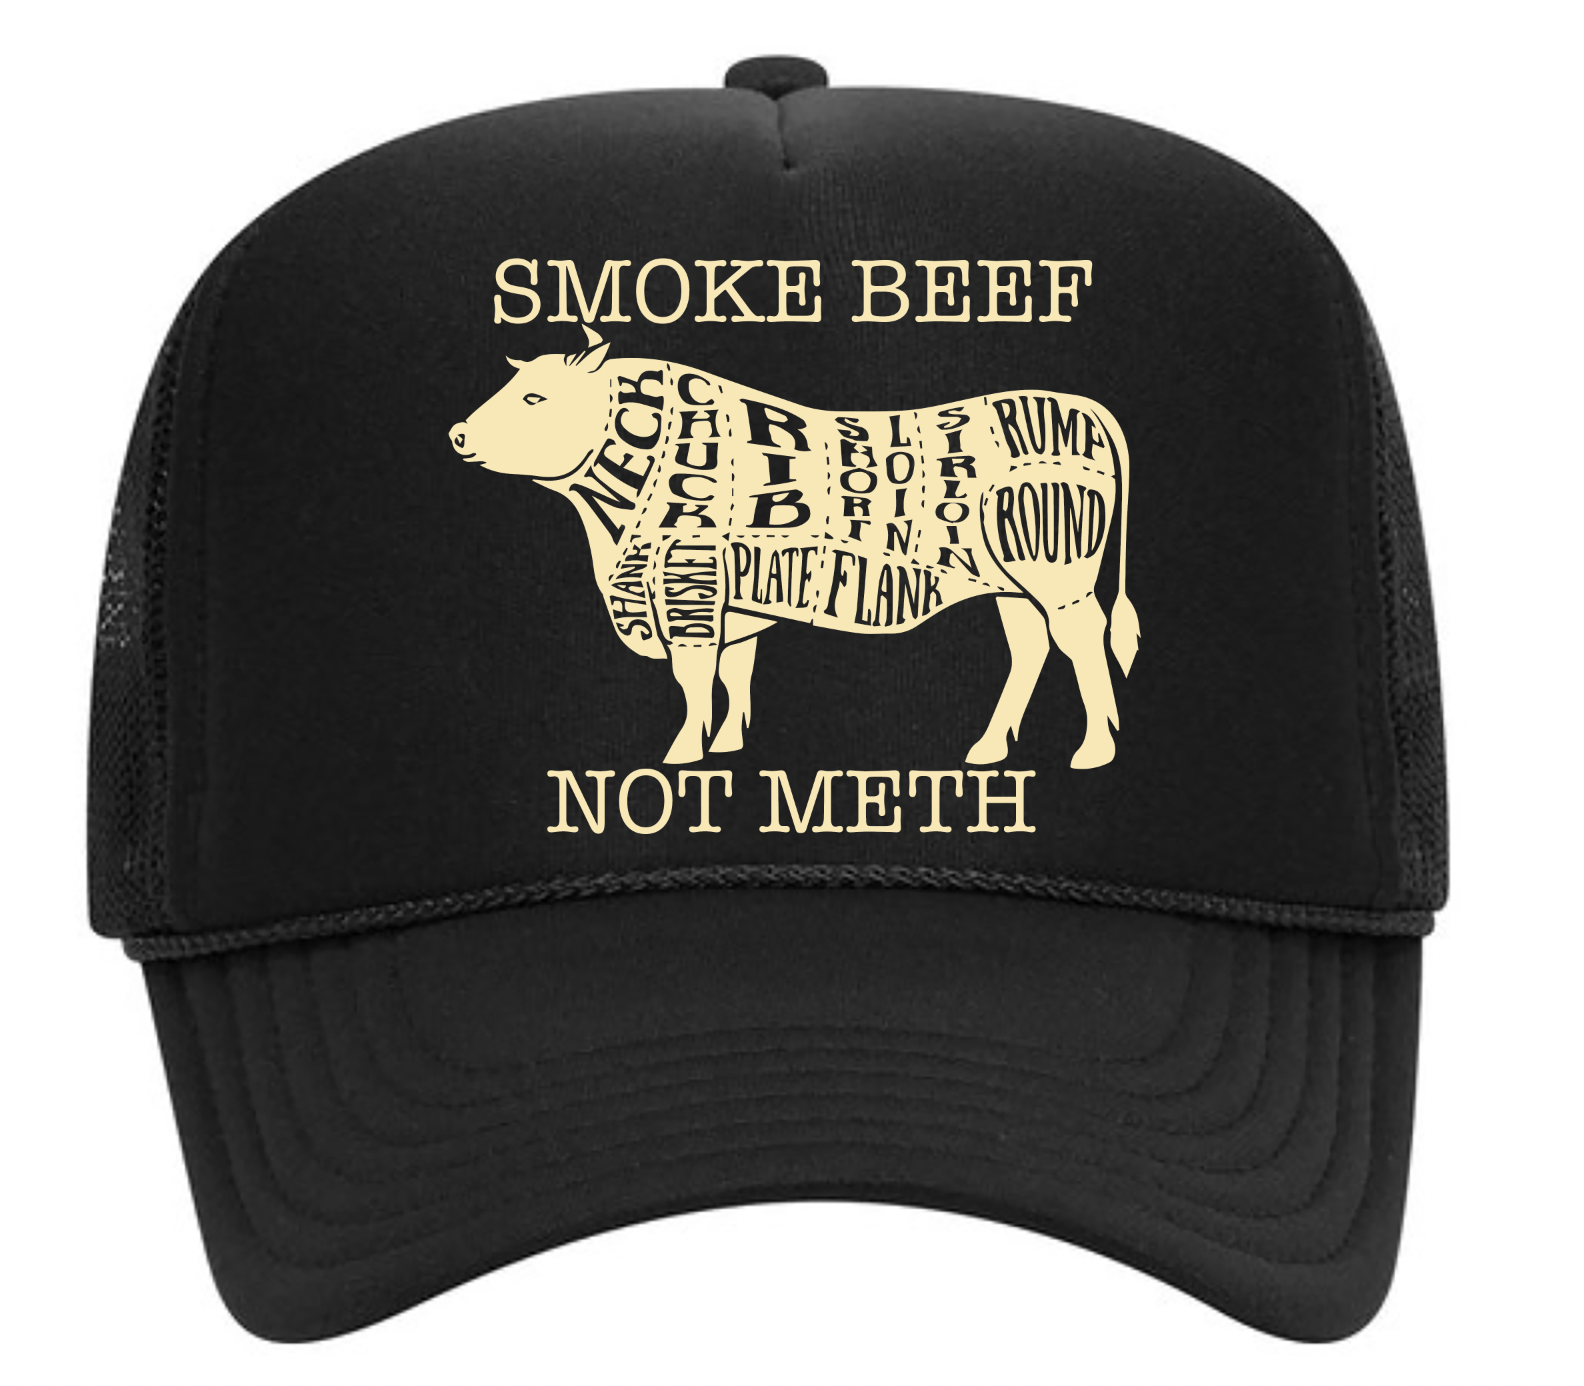 Smoke beef hat